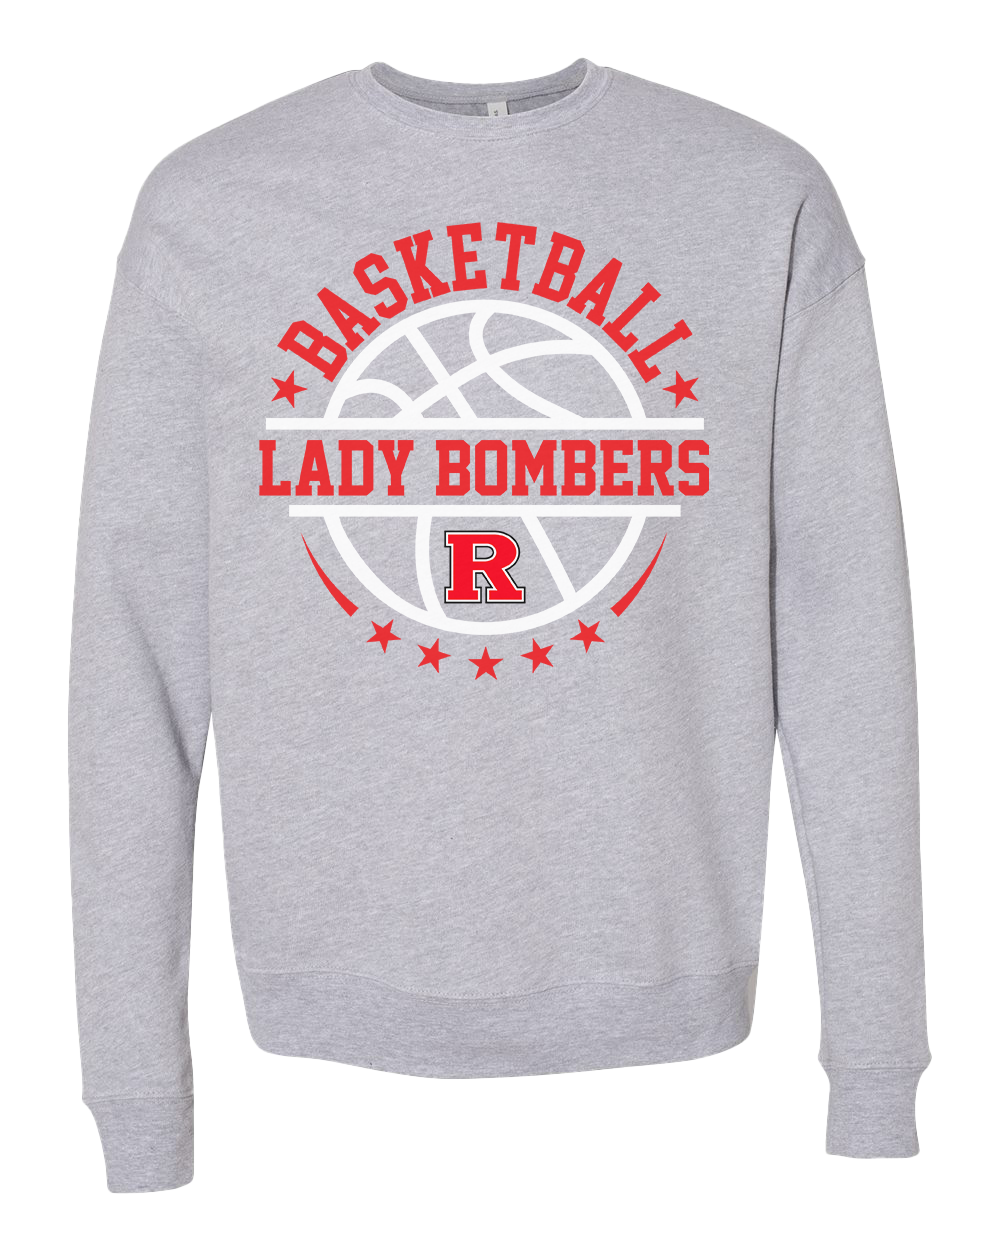 Rensselaer Central Lady Bombers Basketball Sweatshirt - Athletic Heather